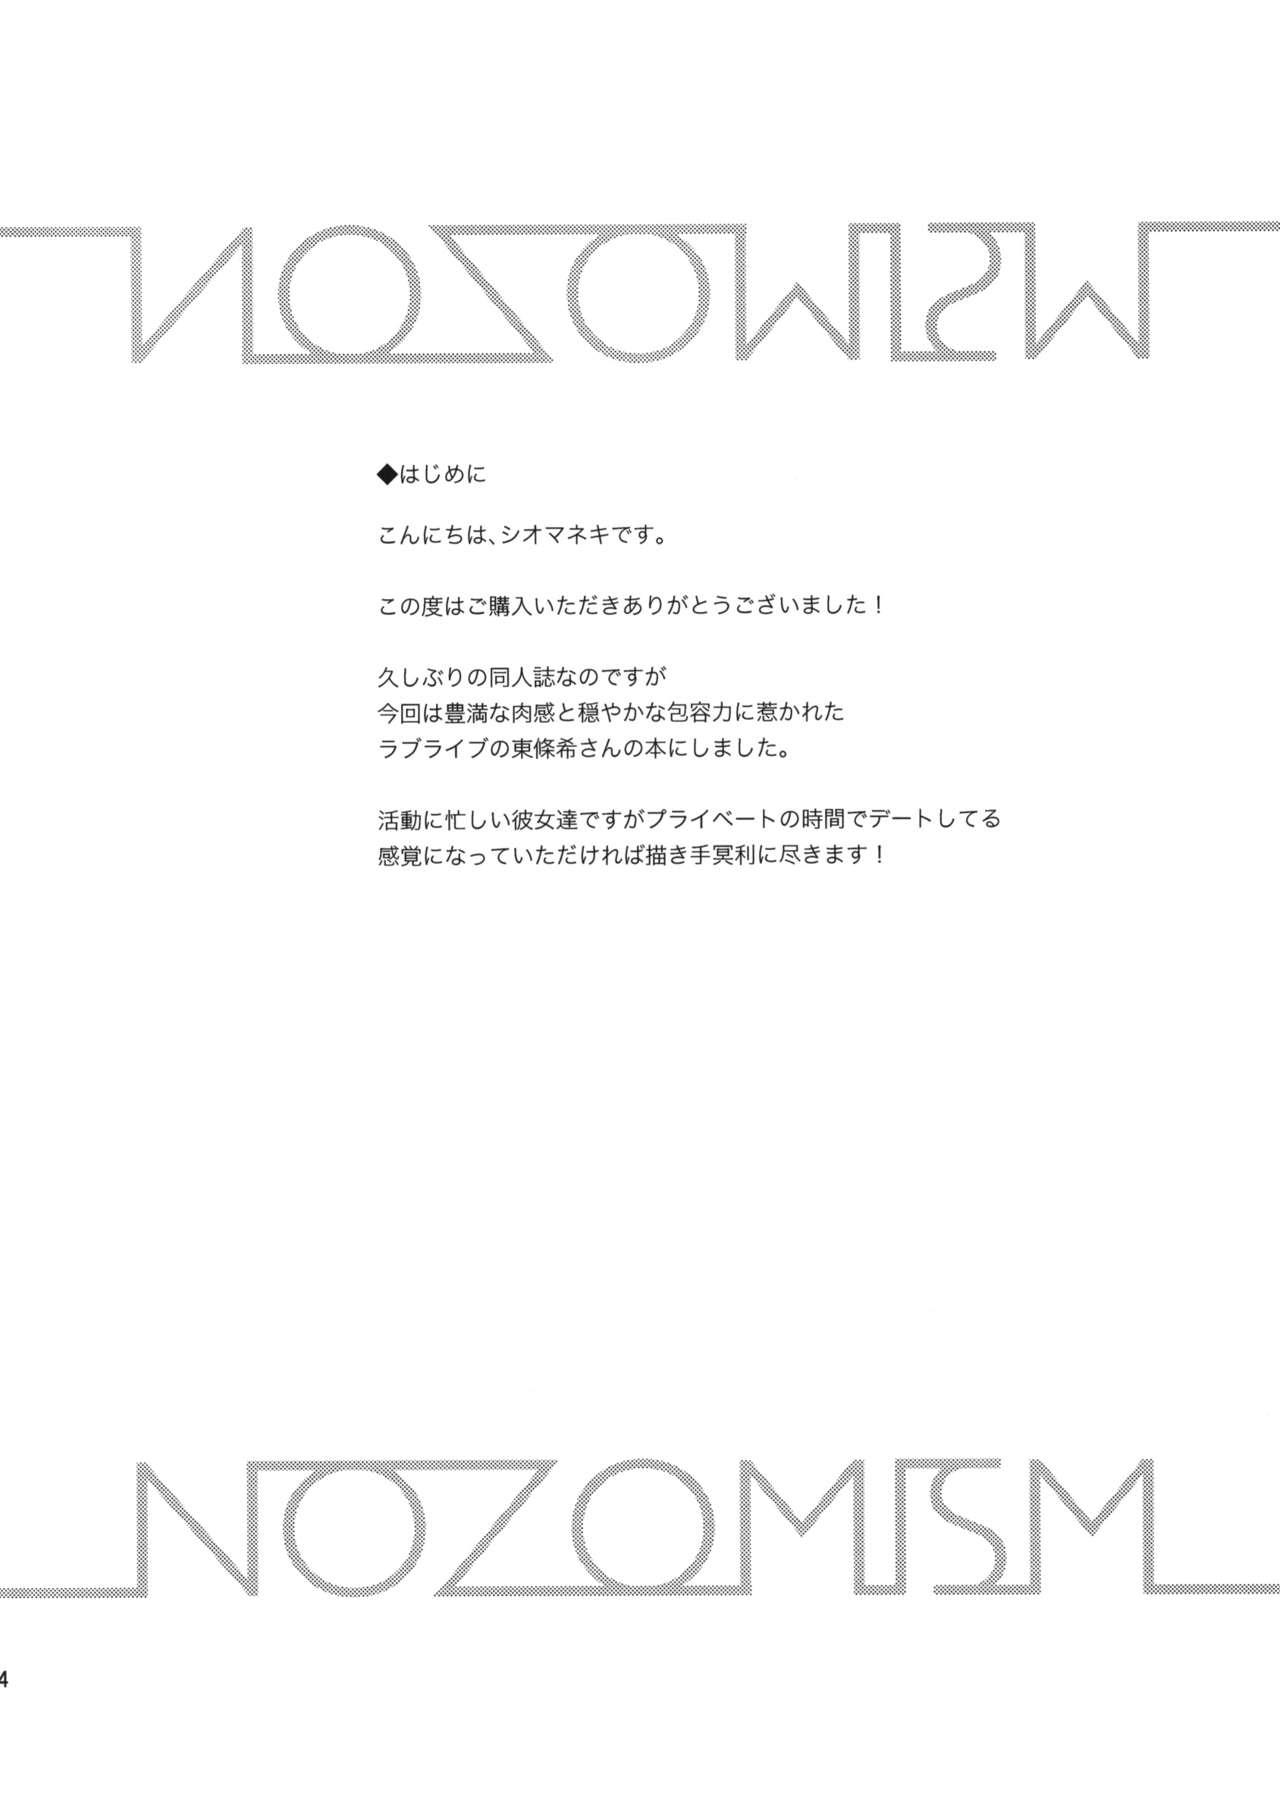 NOZOMISM 3